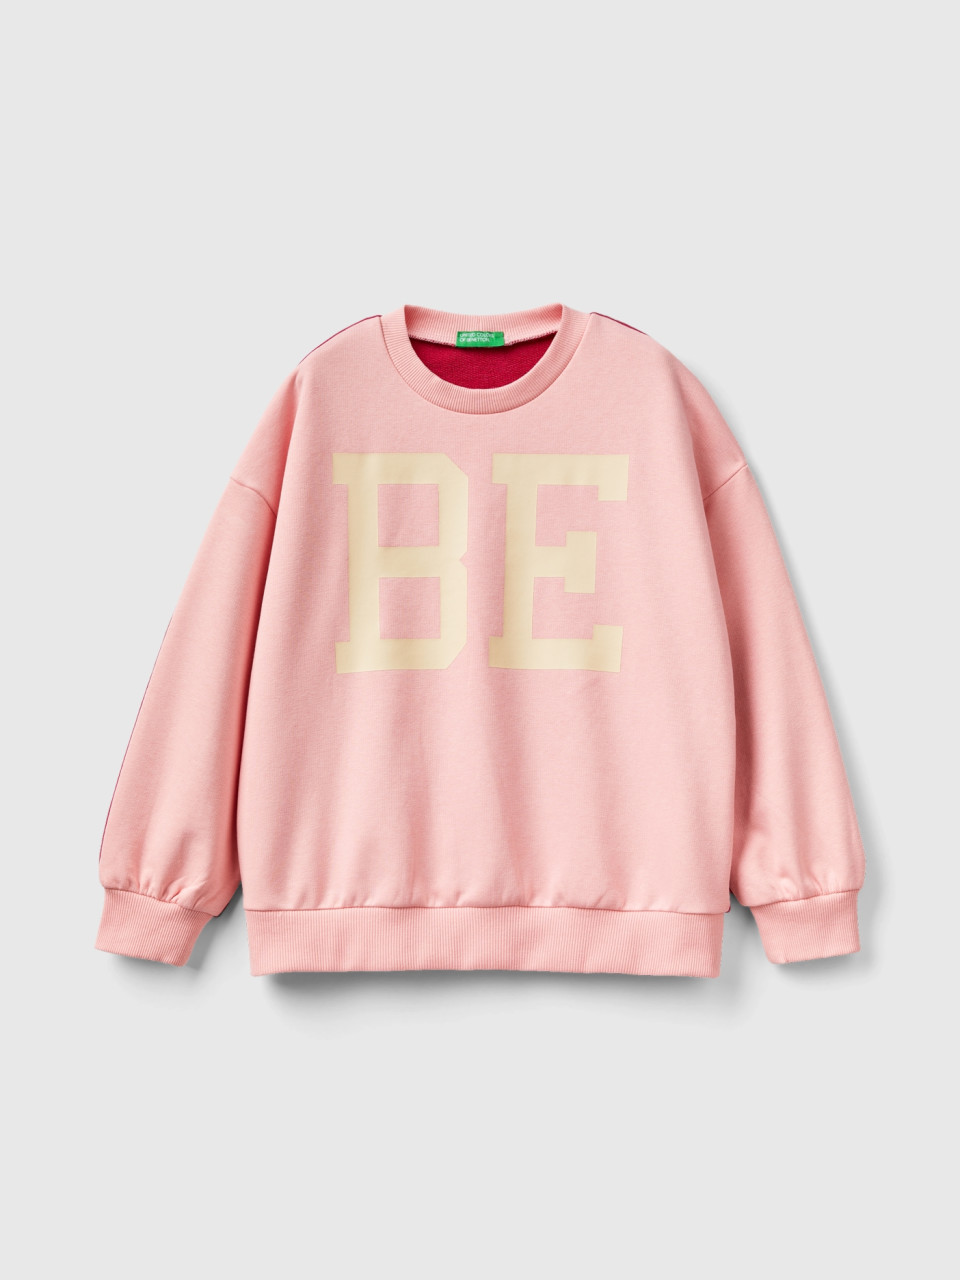 Benetton, Color Block Sweatshirt With Print, Multi-color, Kids